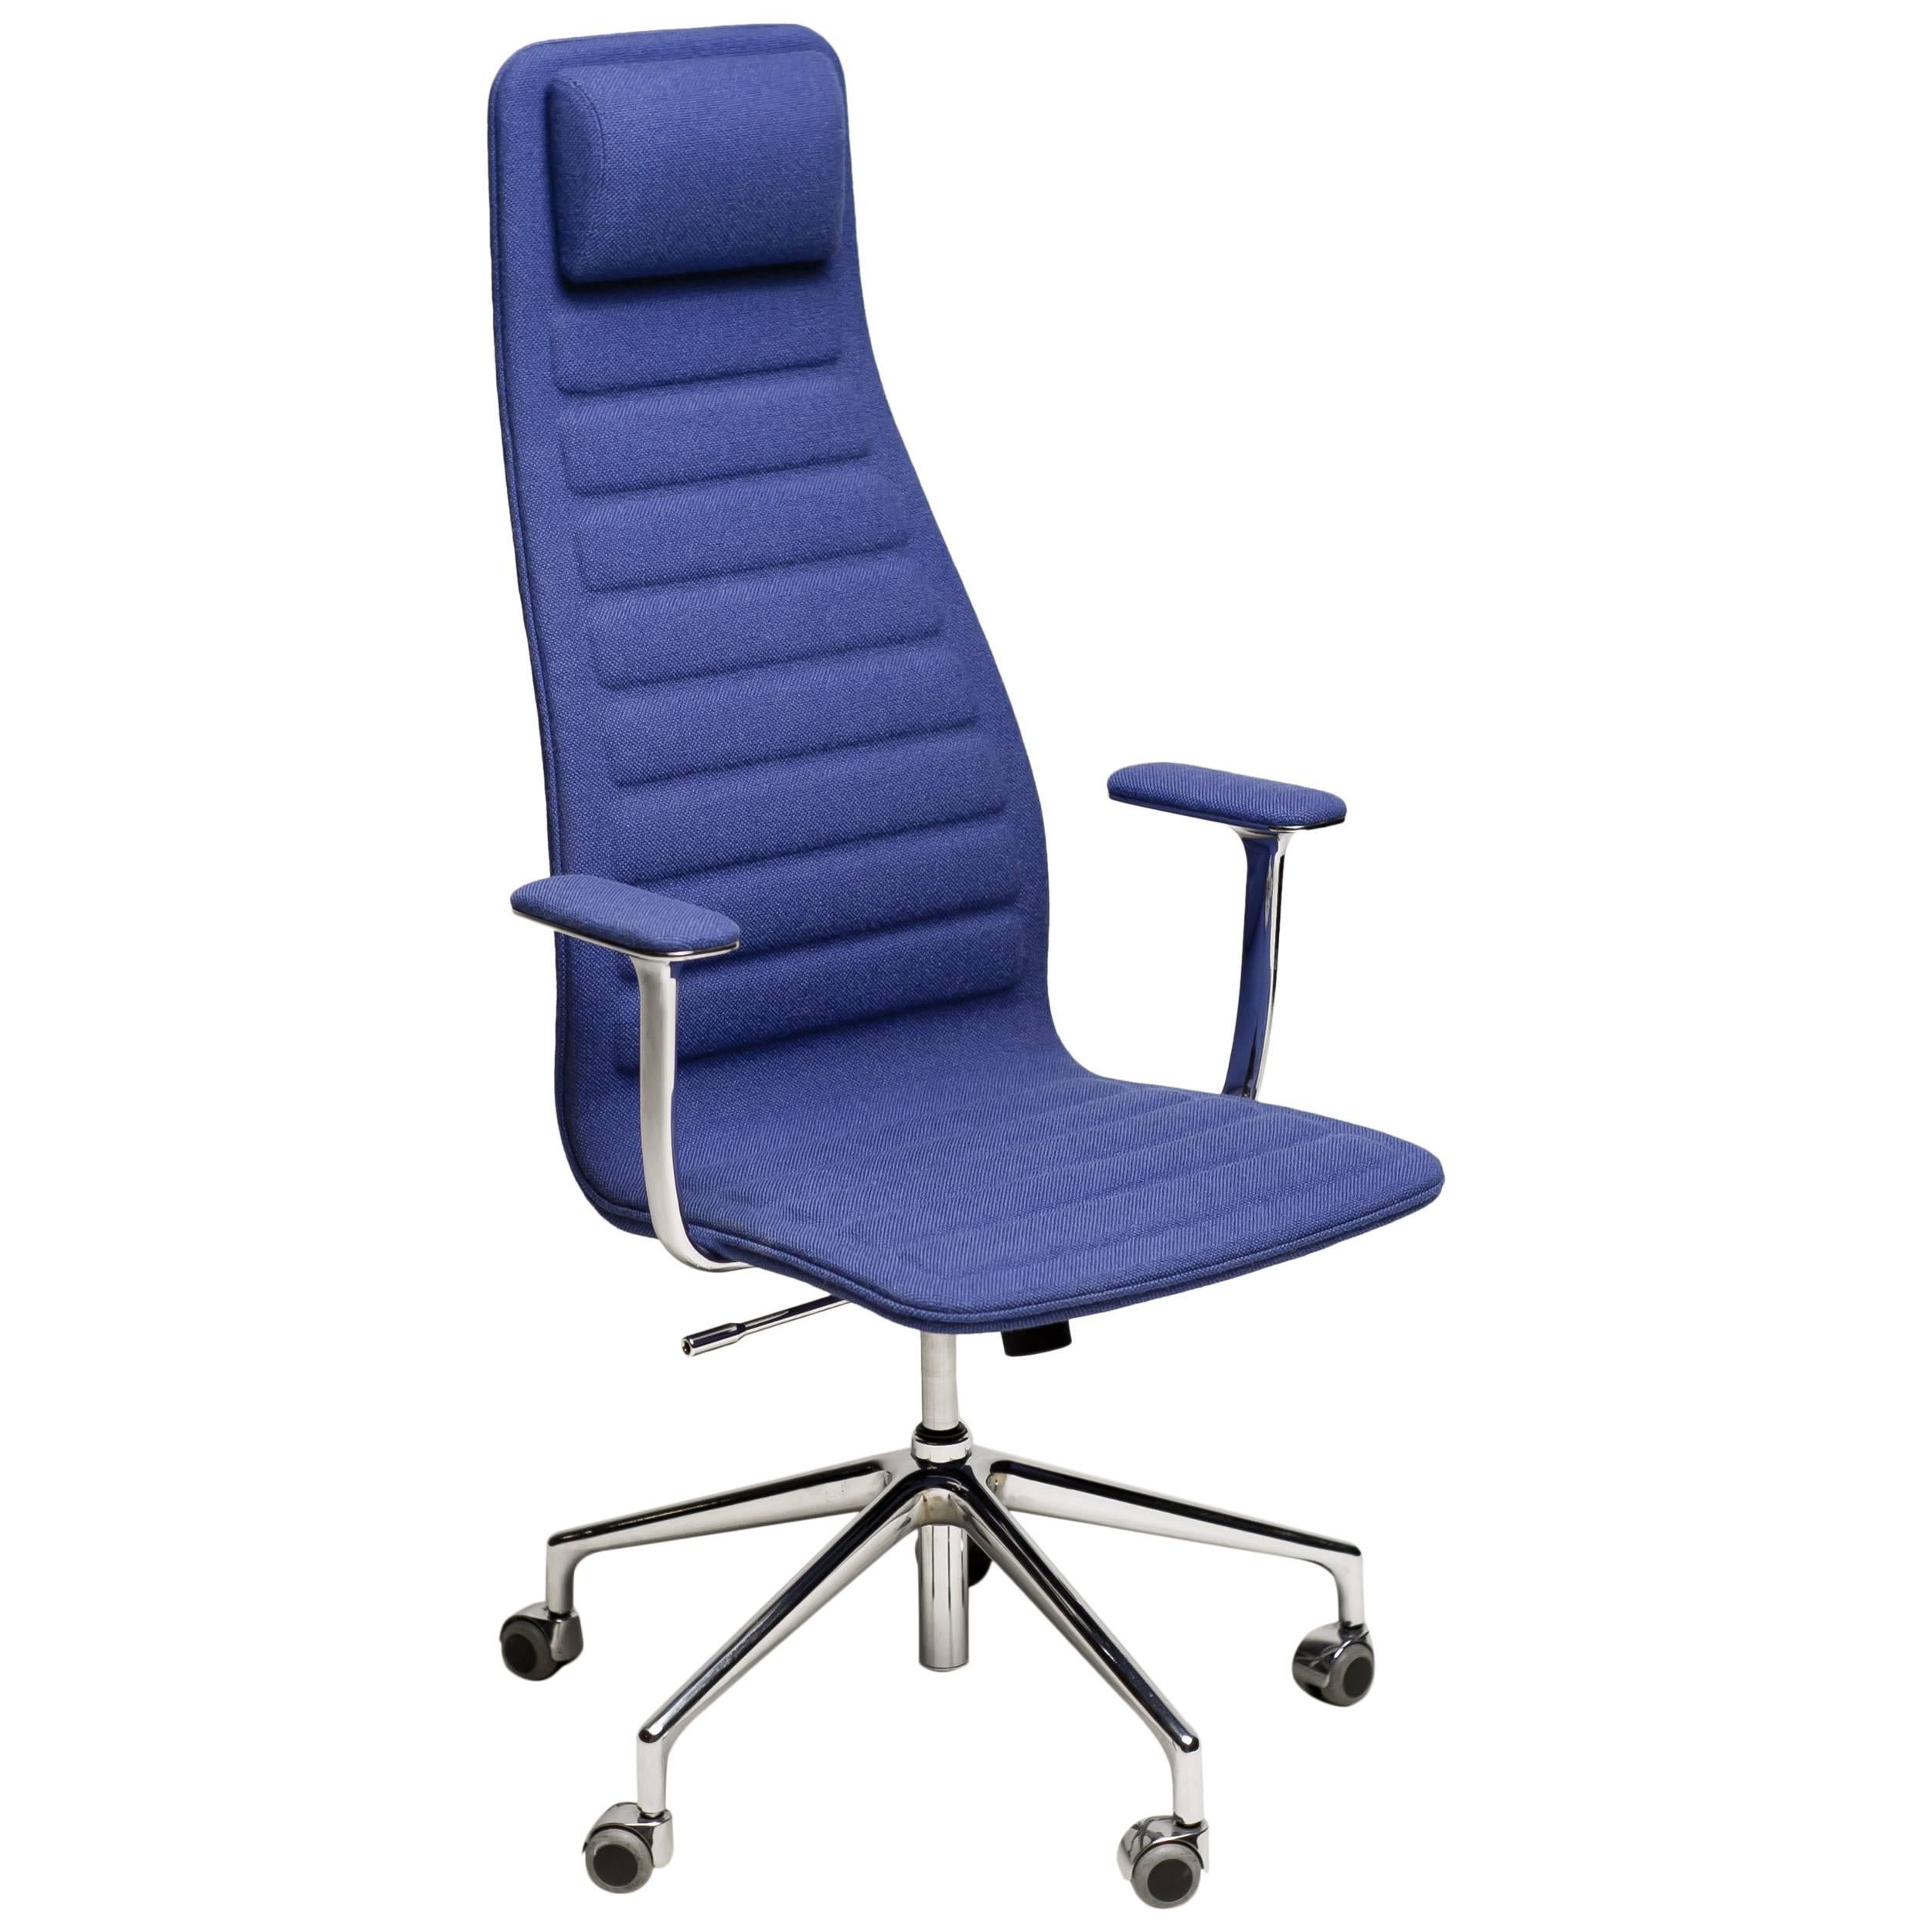 High Back Lotus Office Chair Designed by Jasper Morrison